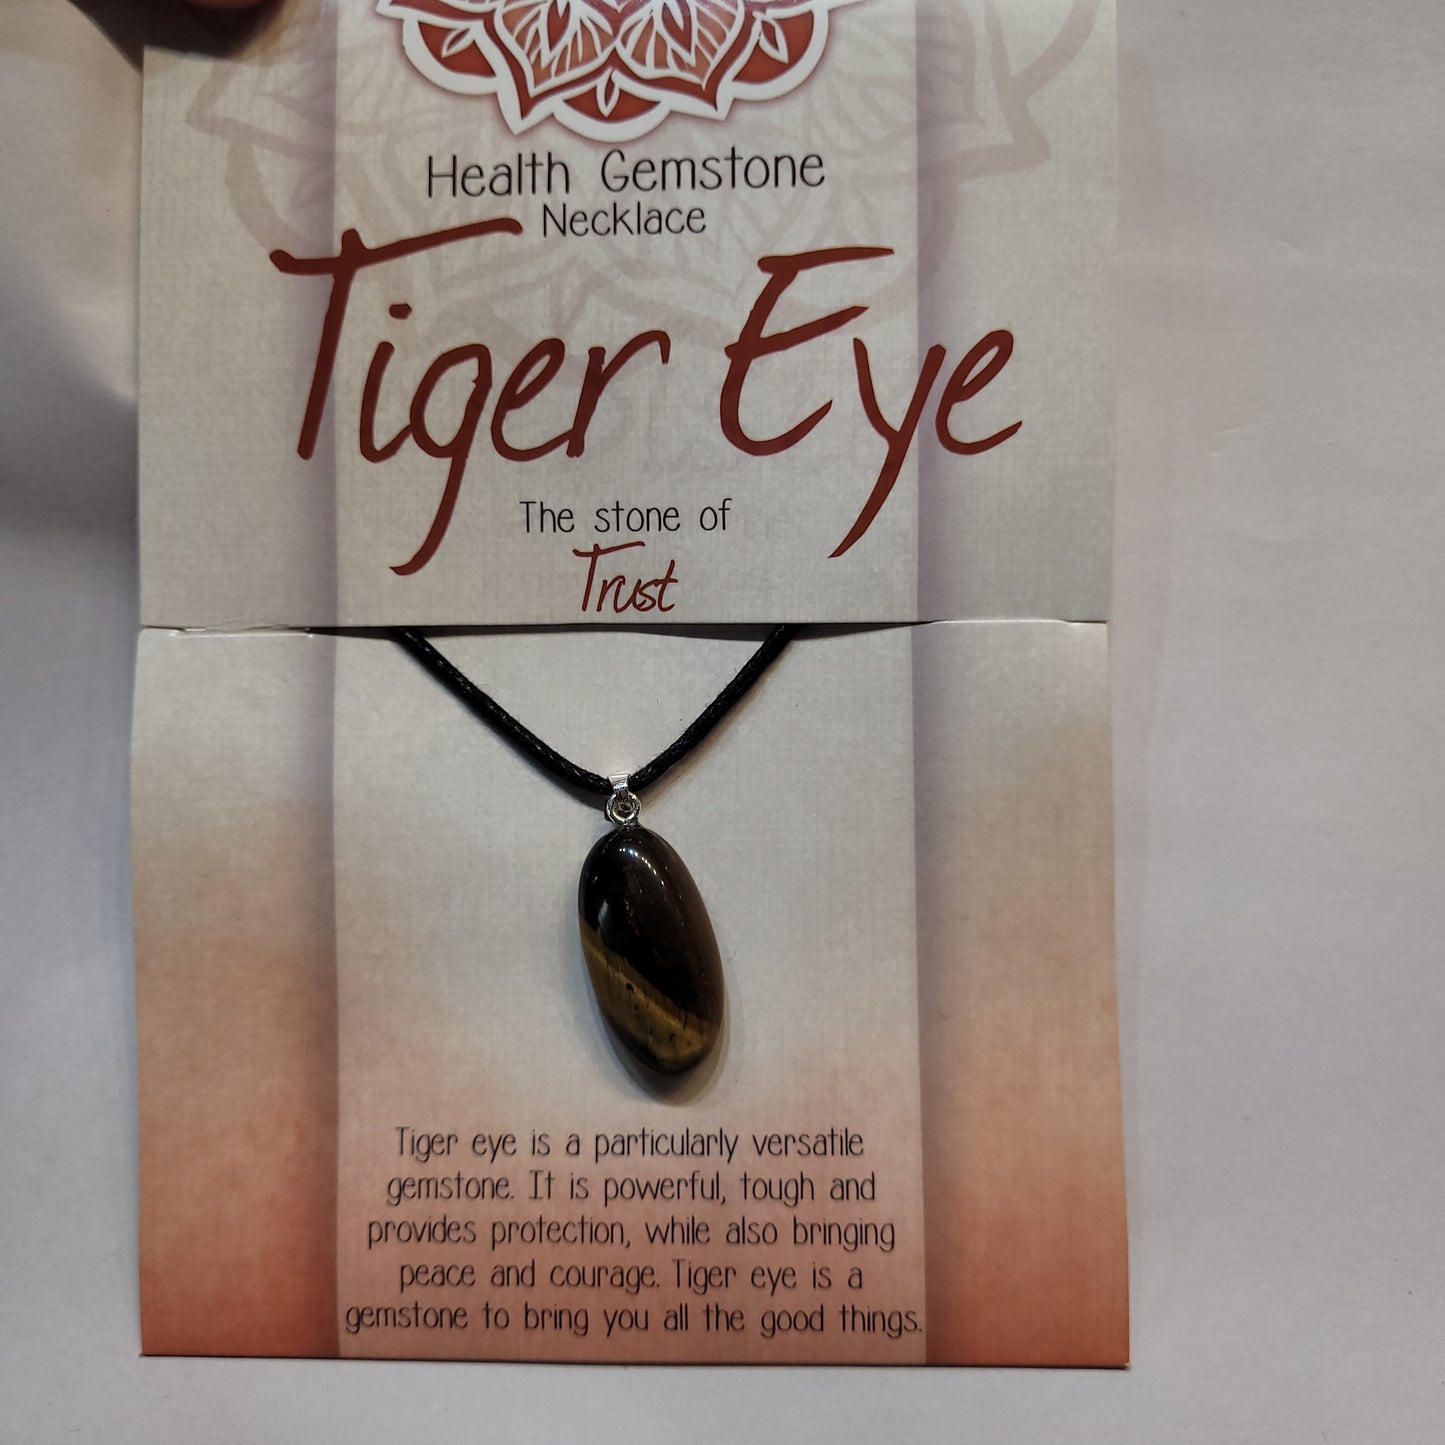 Health Gemstone Necklace Tigers Eye - Rivendell Shop